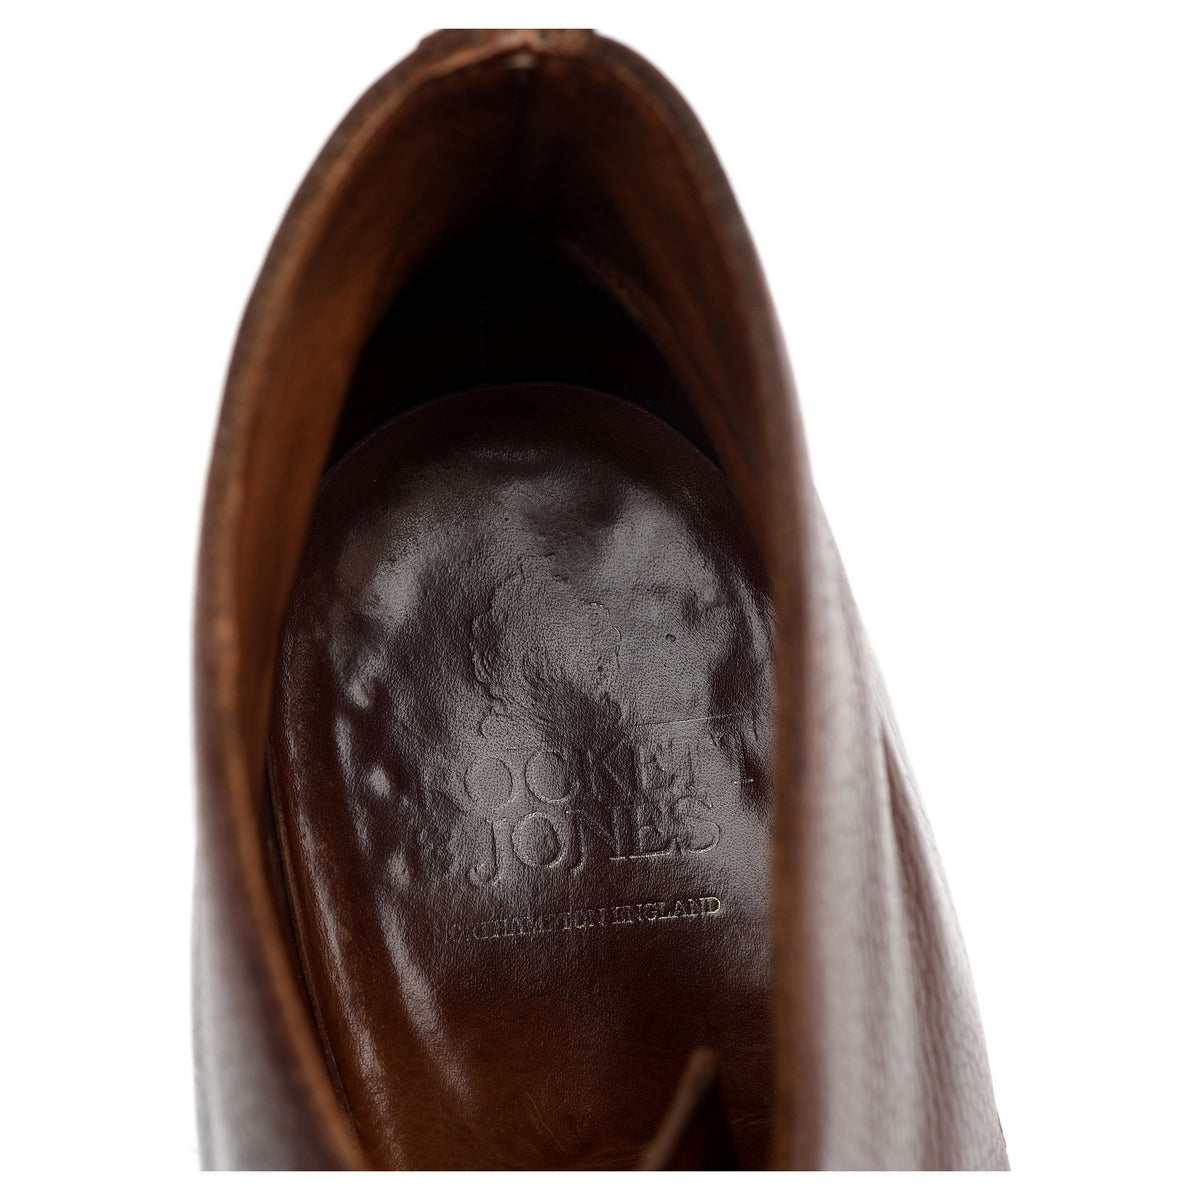 &#39;Chiltern&#39; Tan Brown Leather Chukka Boots UK 10.5 E